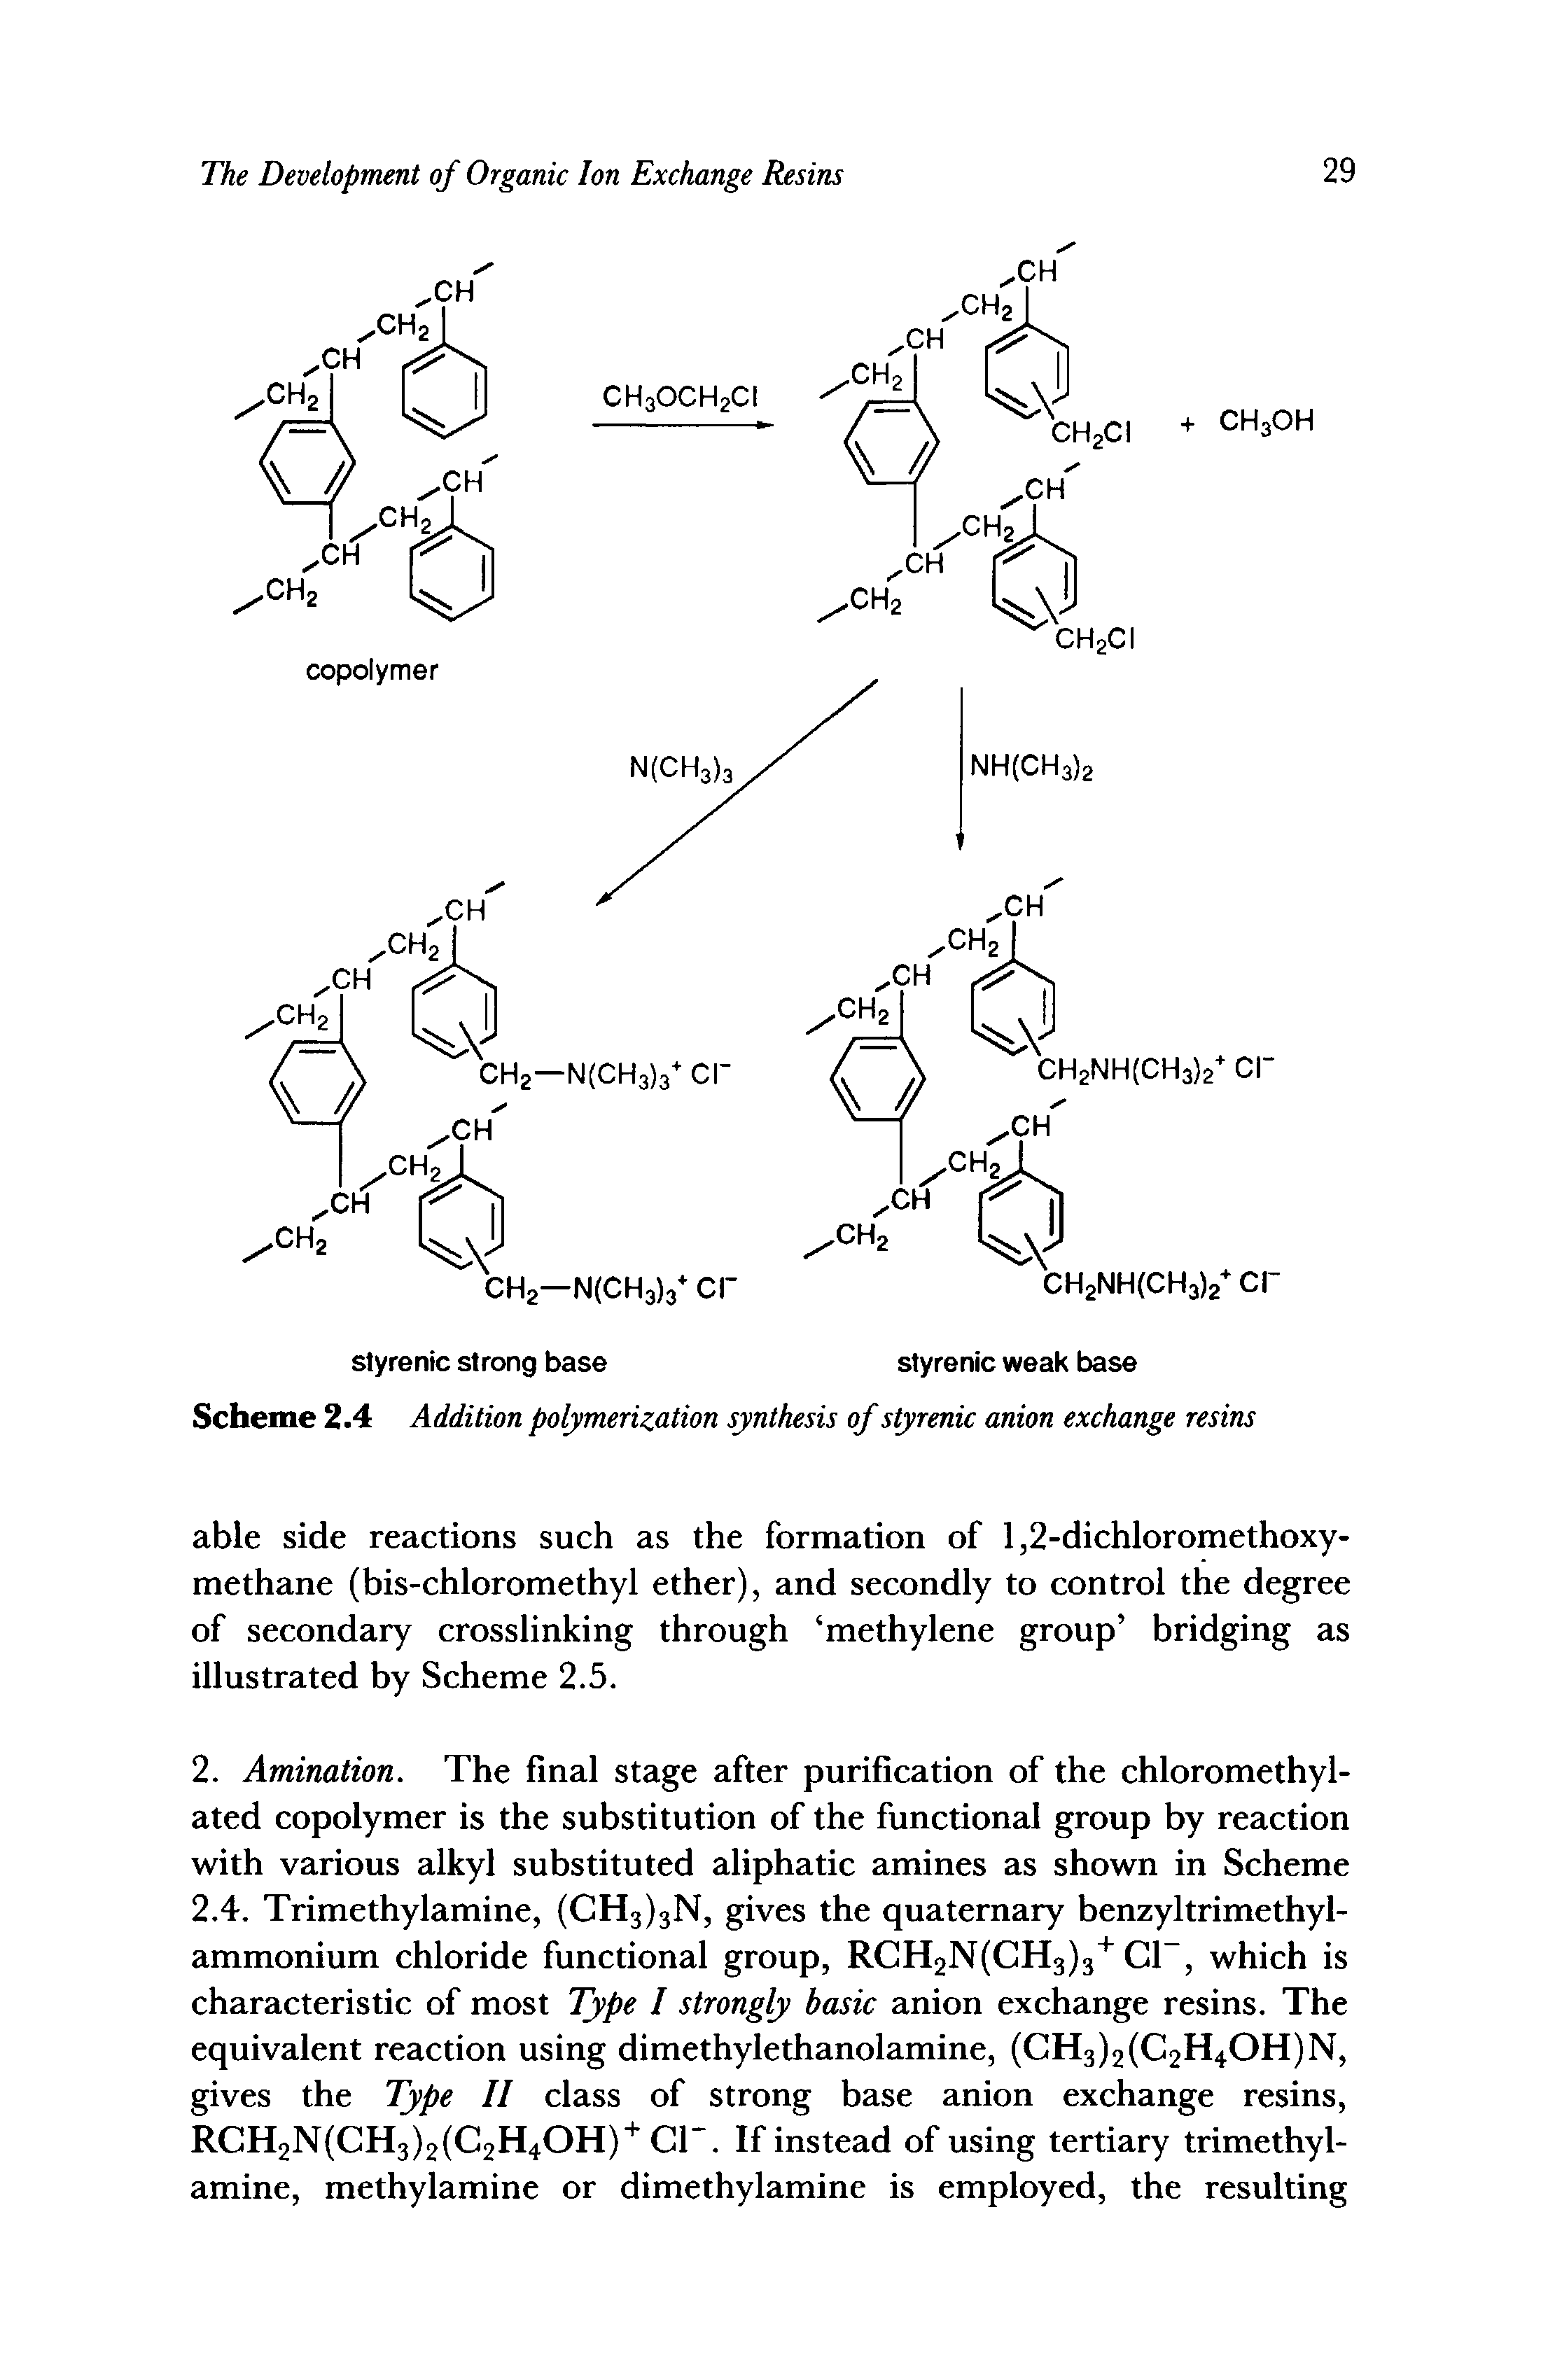 Scheme 2.4 Addition polymerization synthesis of styrenic anion exchange resins...